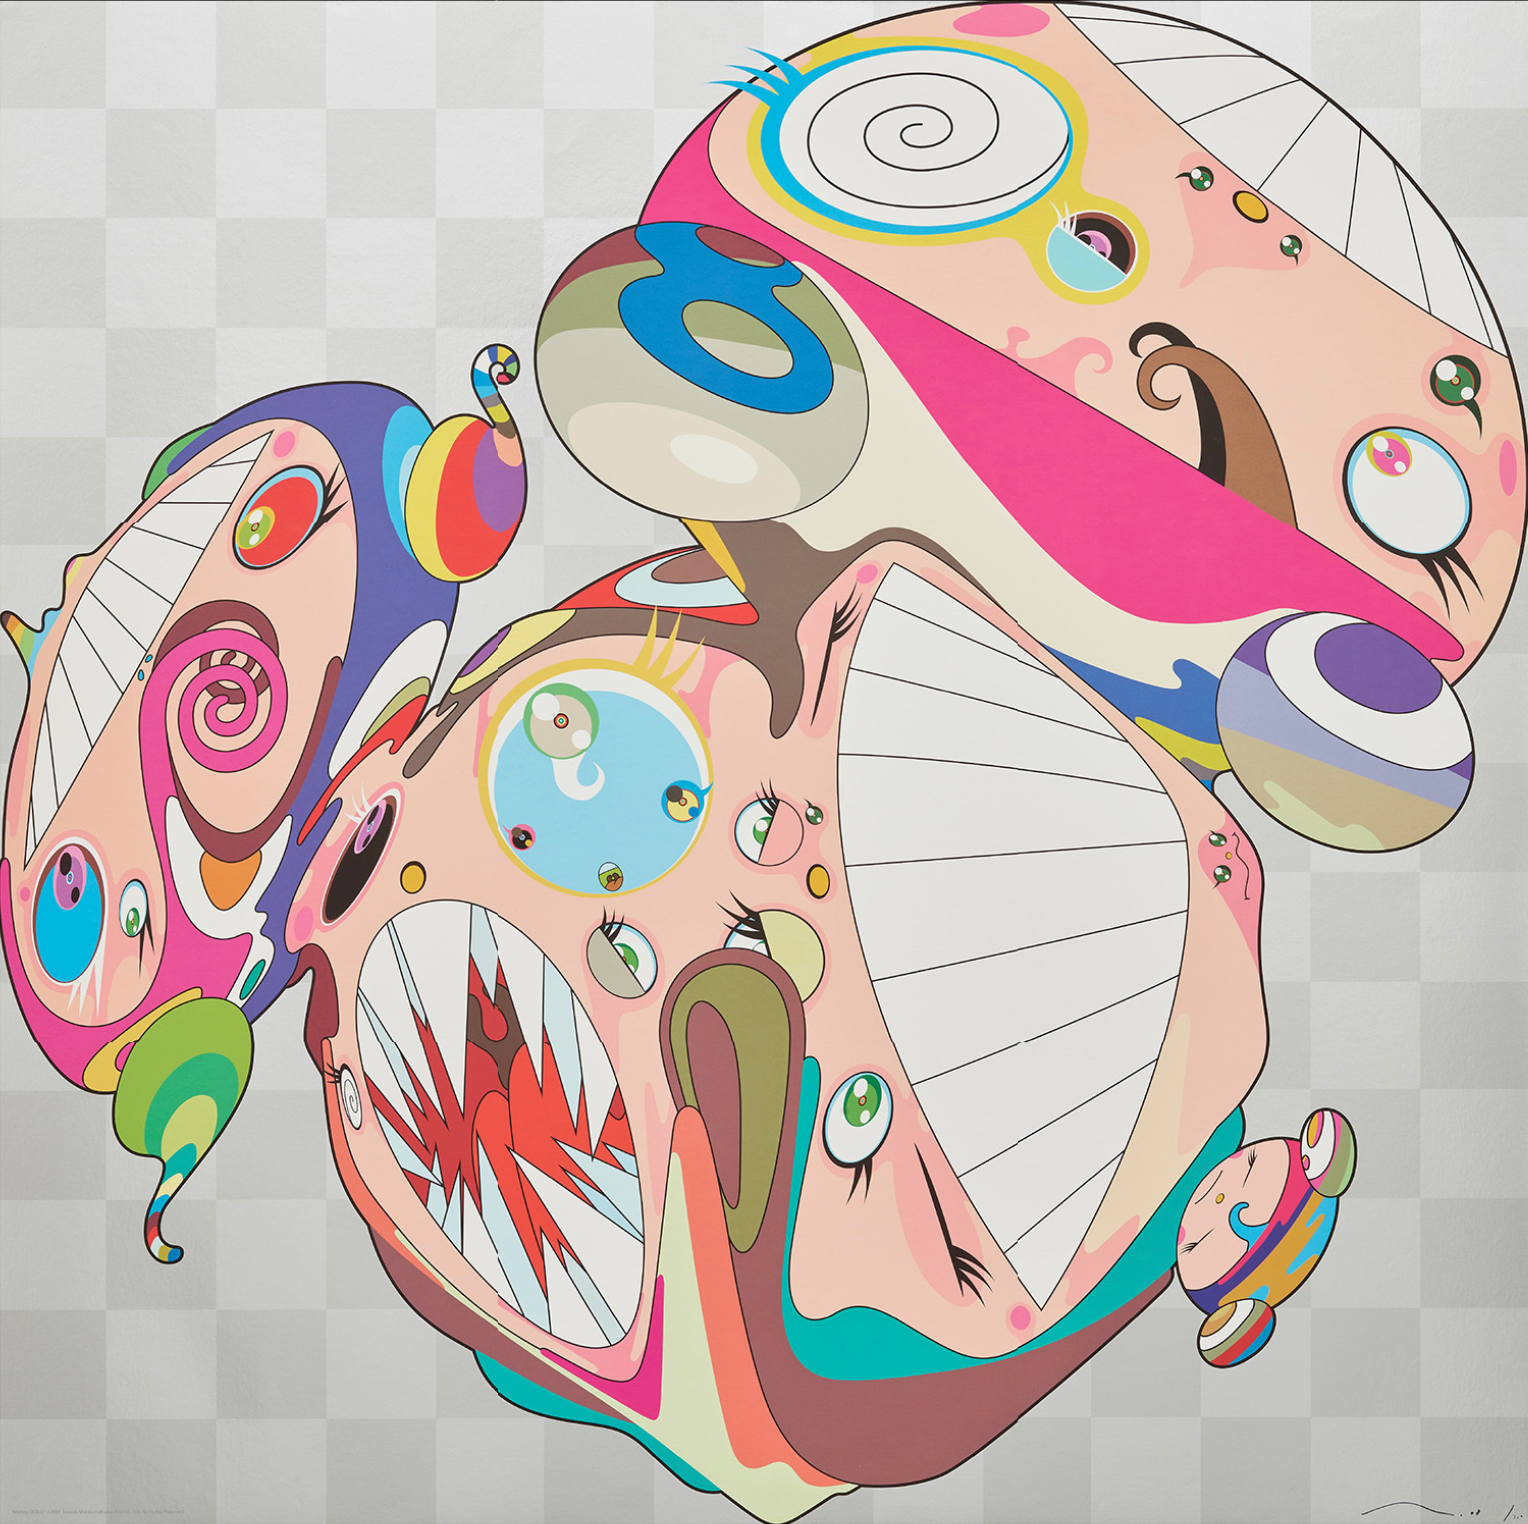 Takashi Murakami - Melting DOB E, 2008 - Pinto Gallery